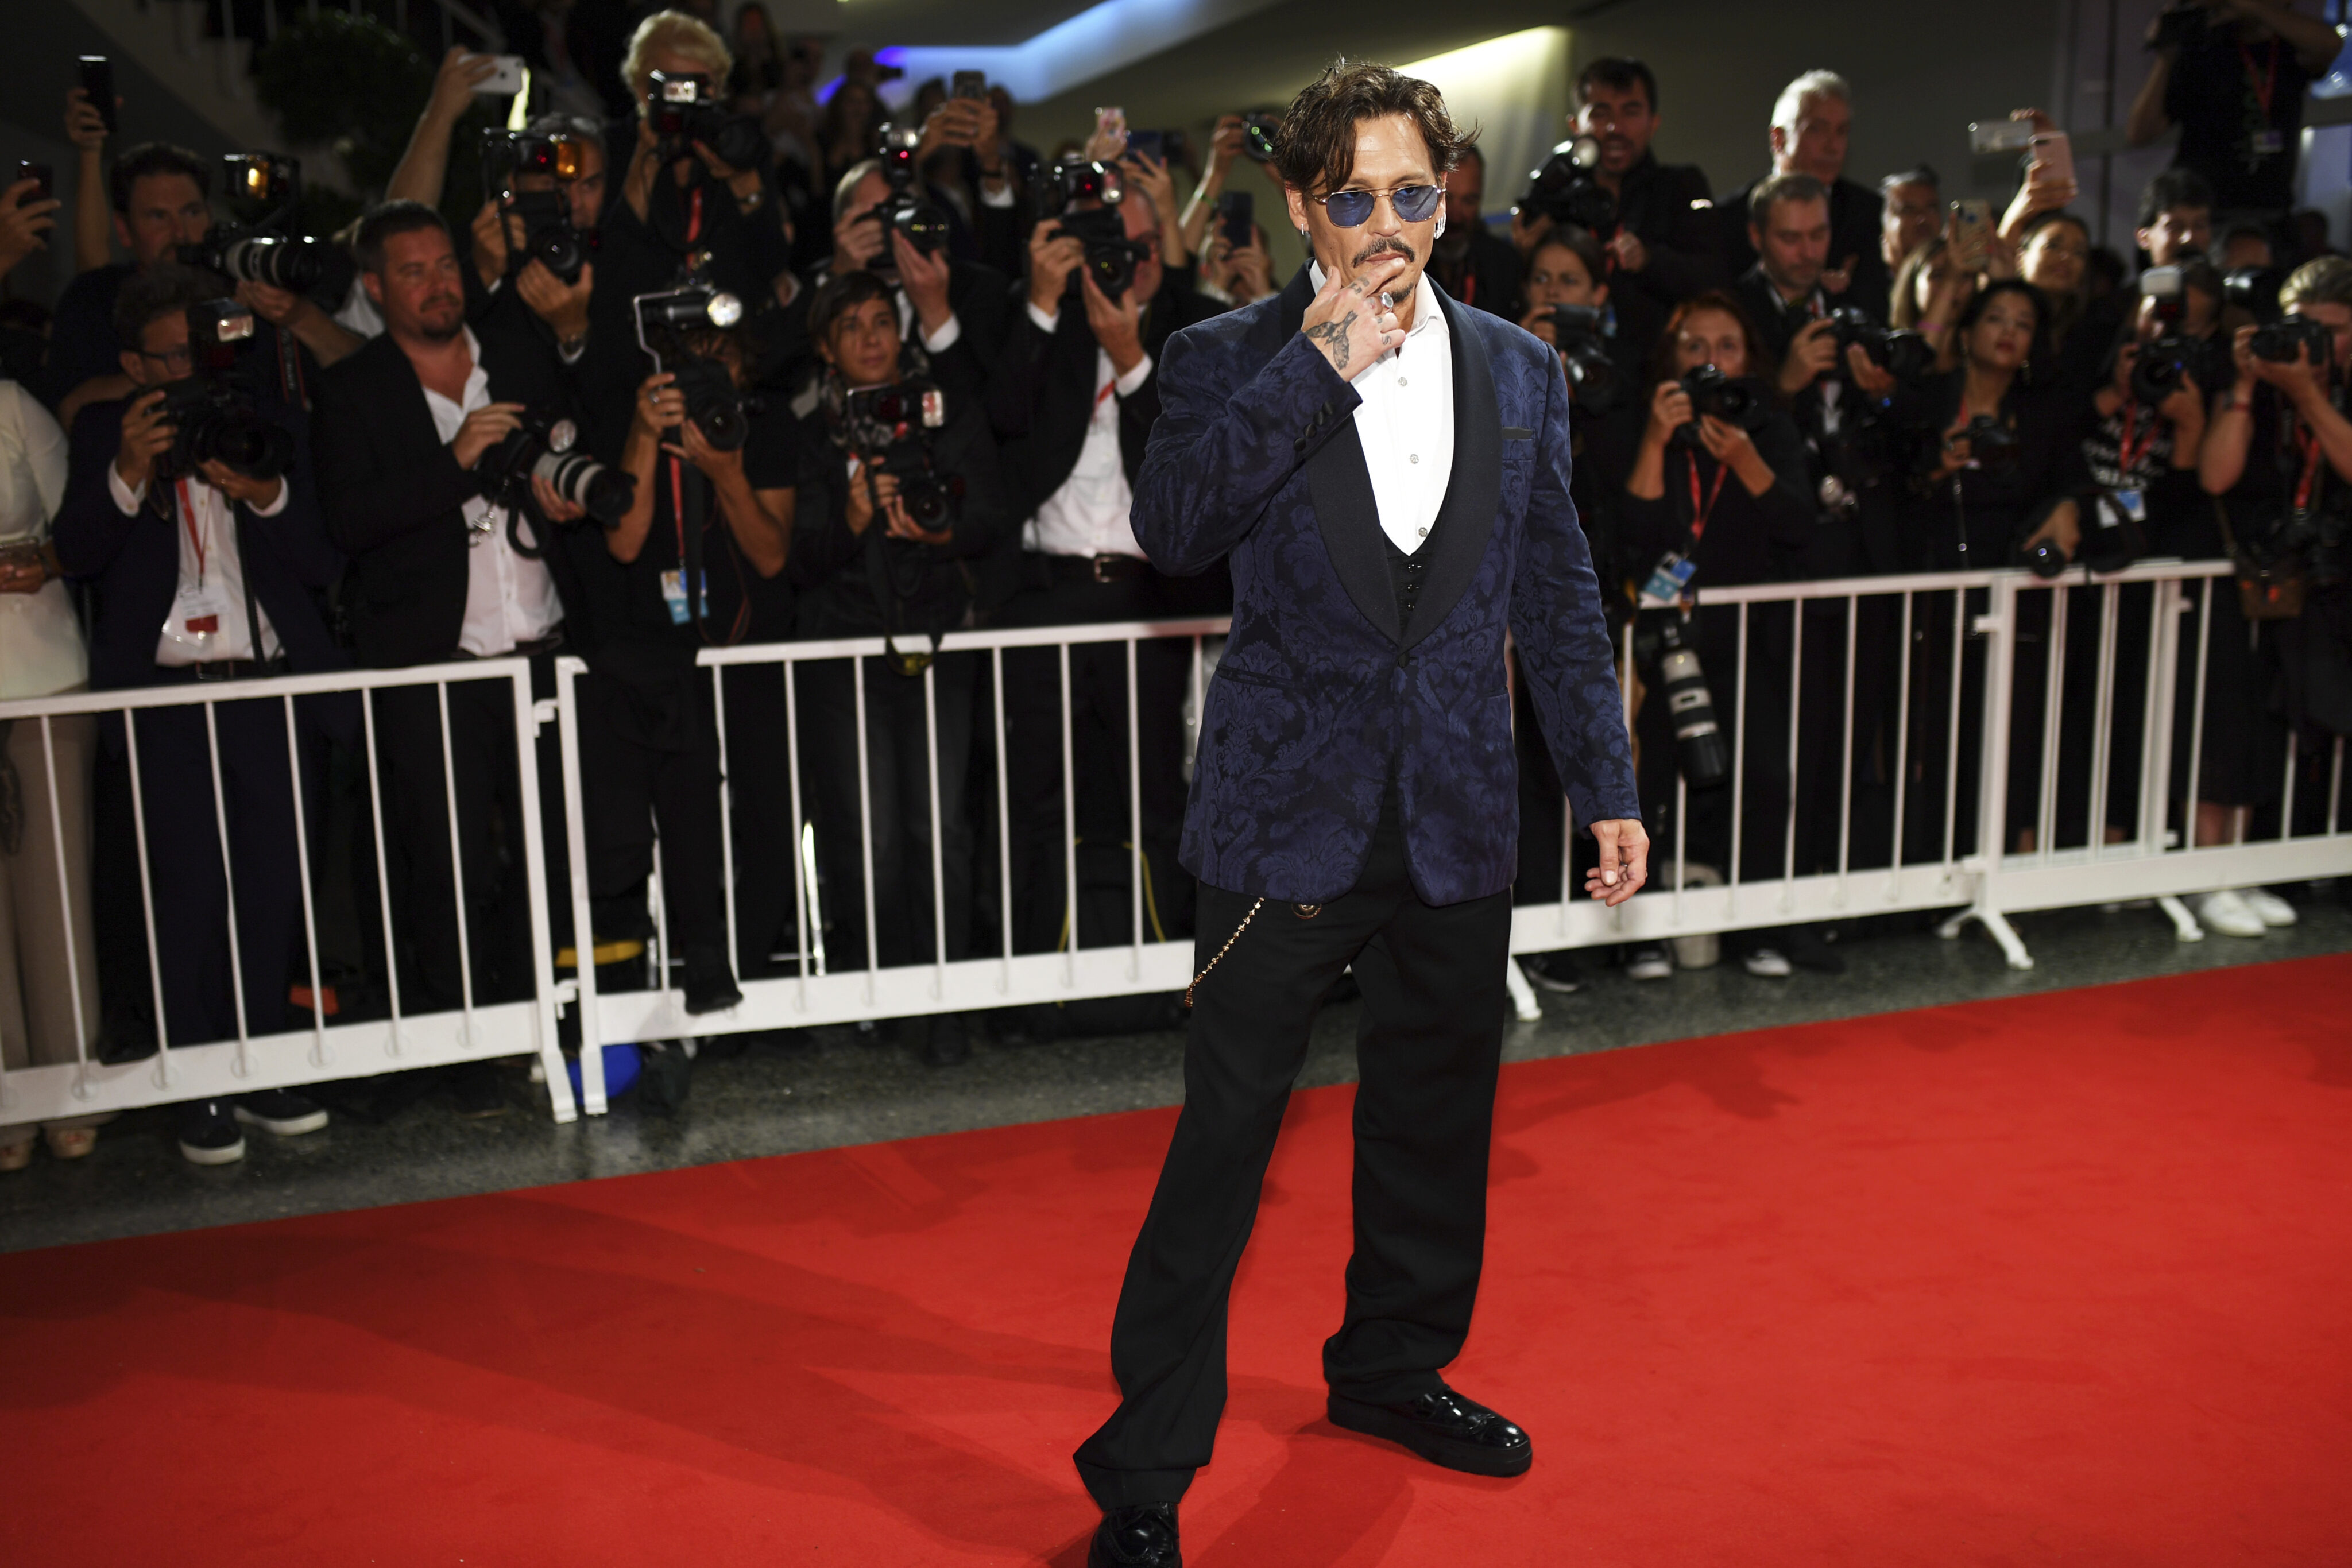 Johnny Depp Academy Awards